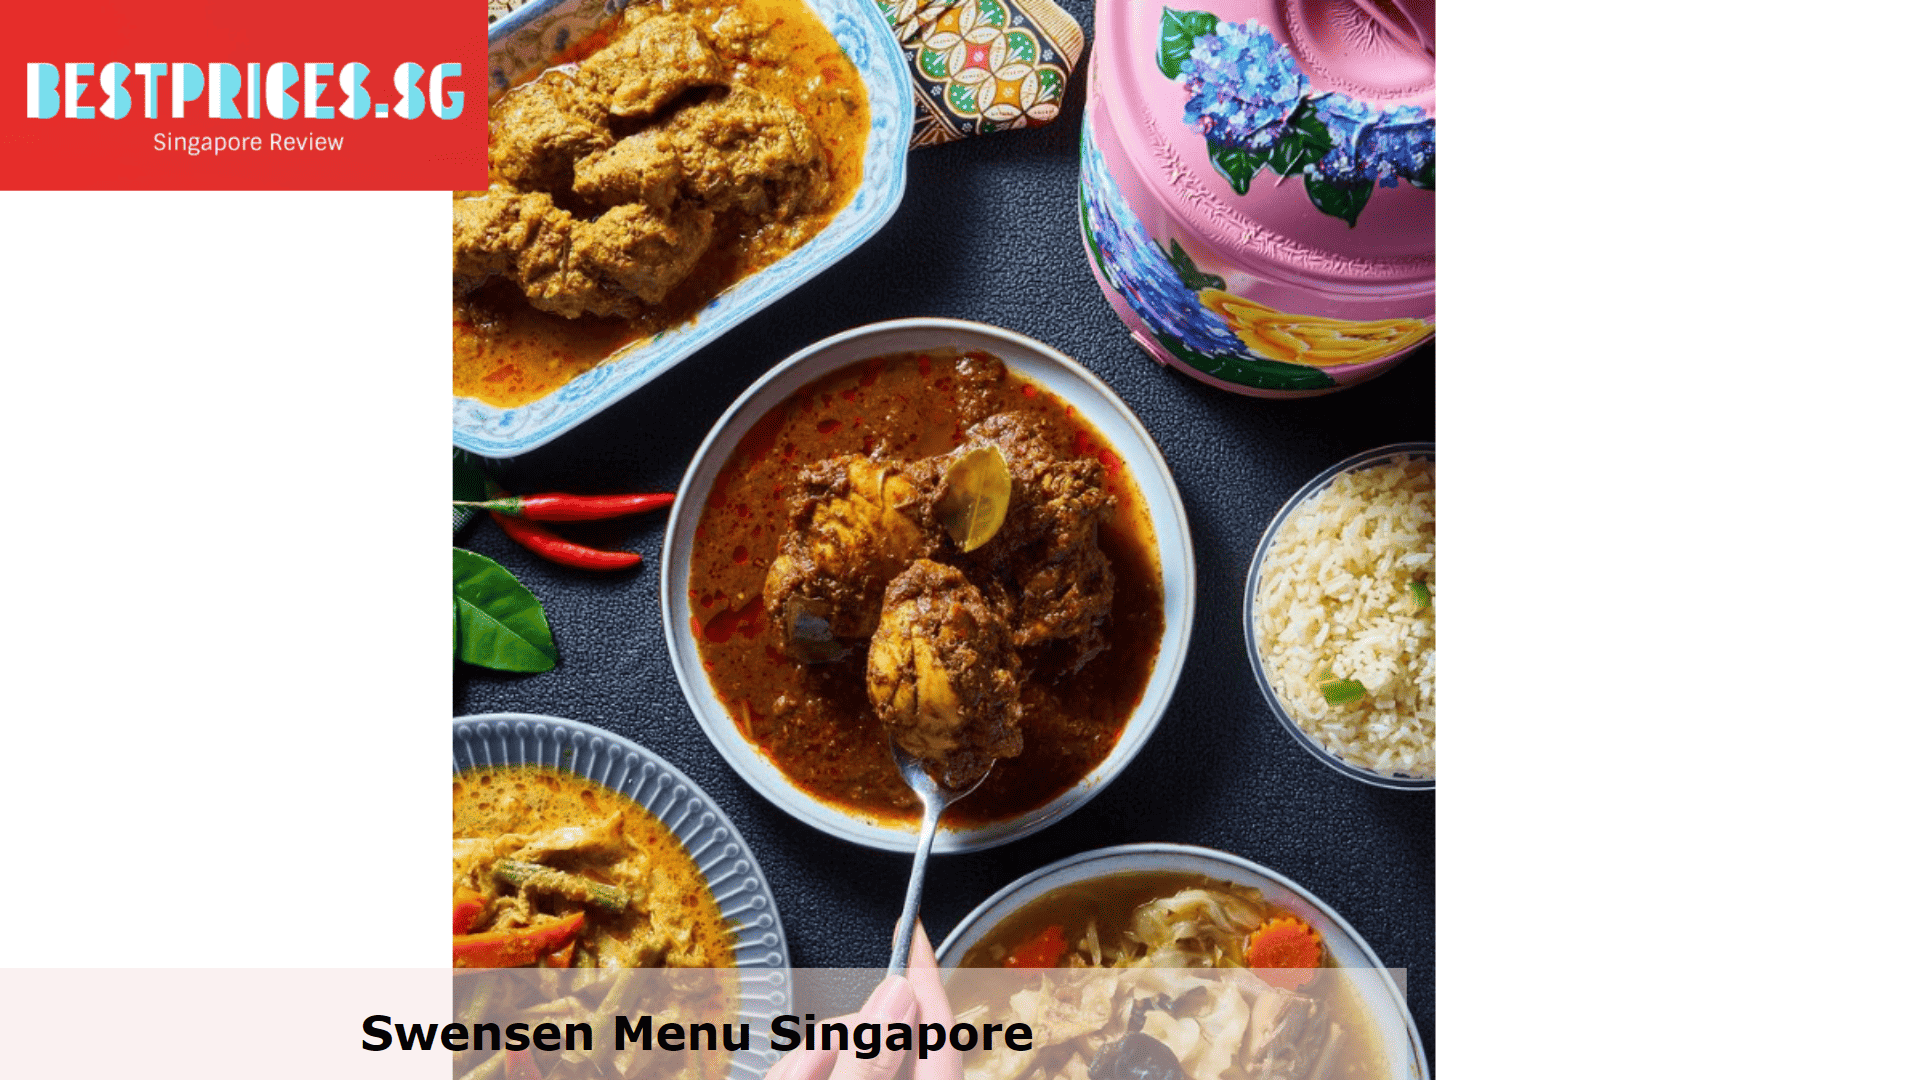 Swensen Singapore Menu, swensen menu price, swensen's ice cream menu, swensen menu price, swensen menu price singapore, swensen's menu pdf, earle swensen menu, swensen promotion, swensen breakfast menu, Earle Swensen menu, 